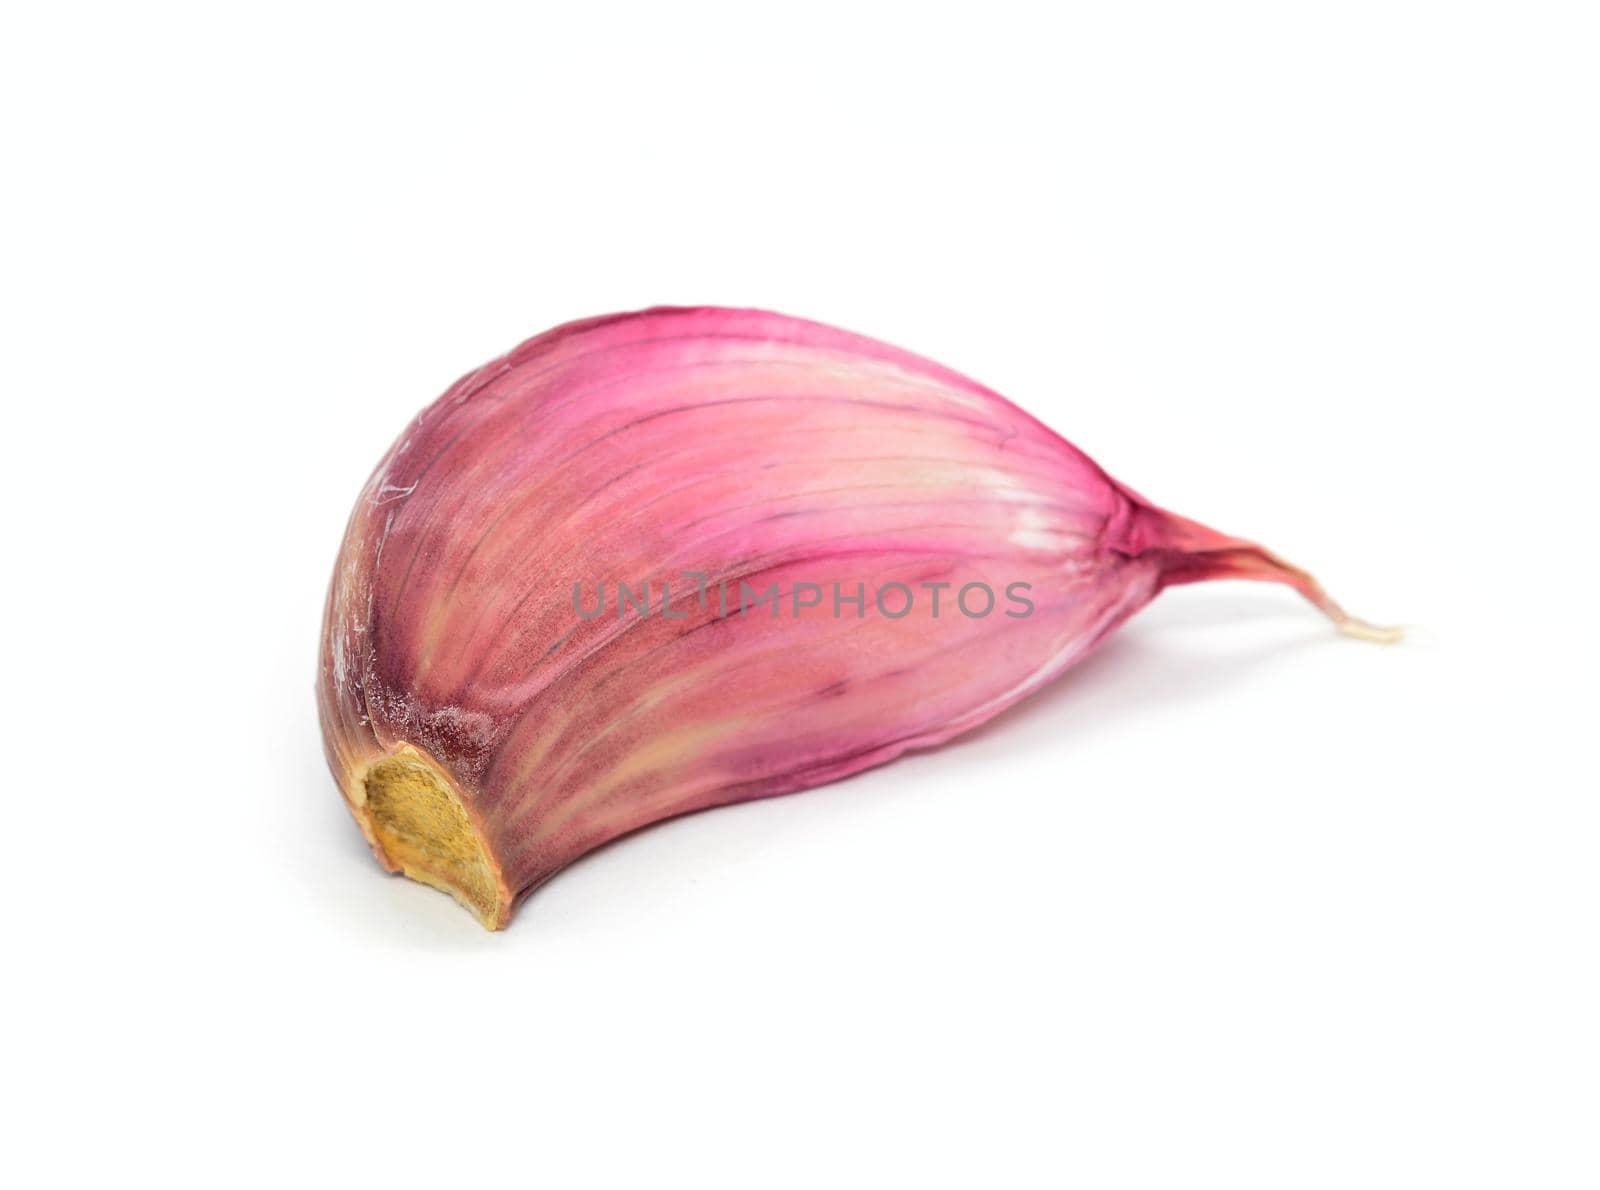 Clove of garlic on white background by hamik